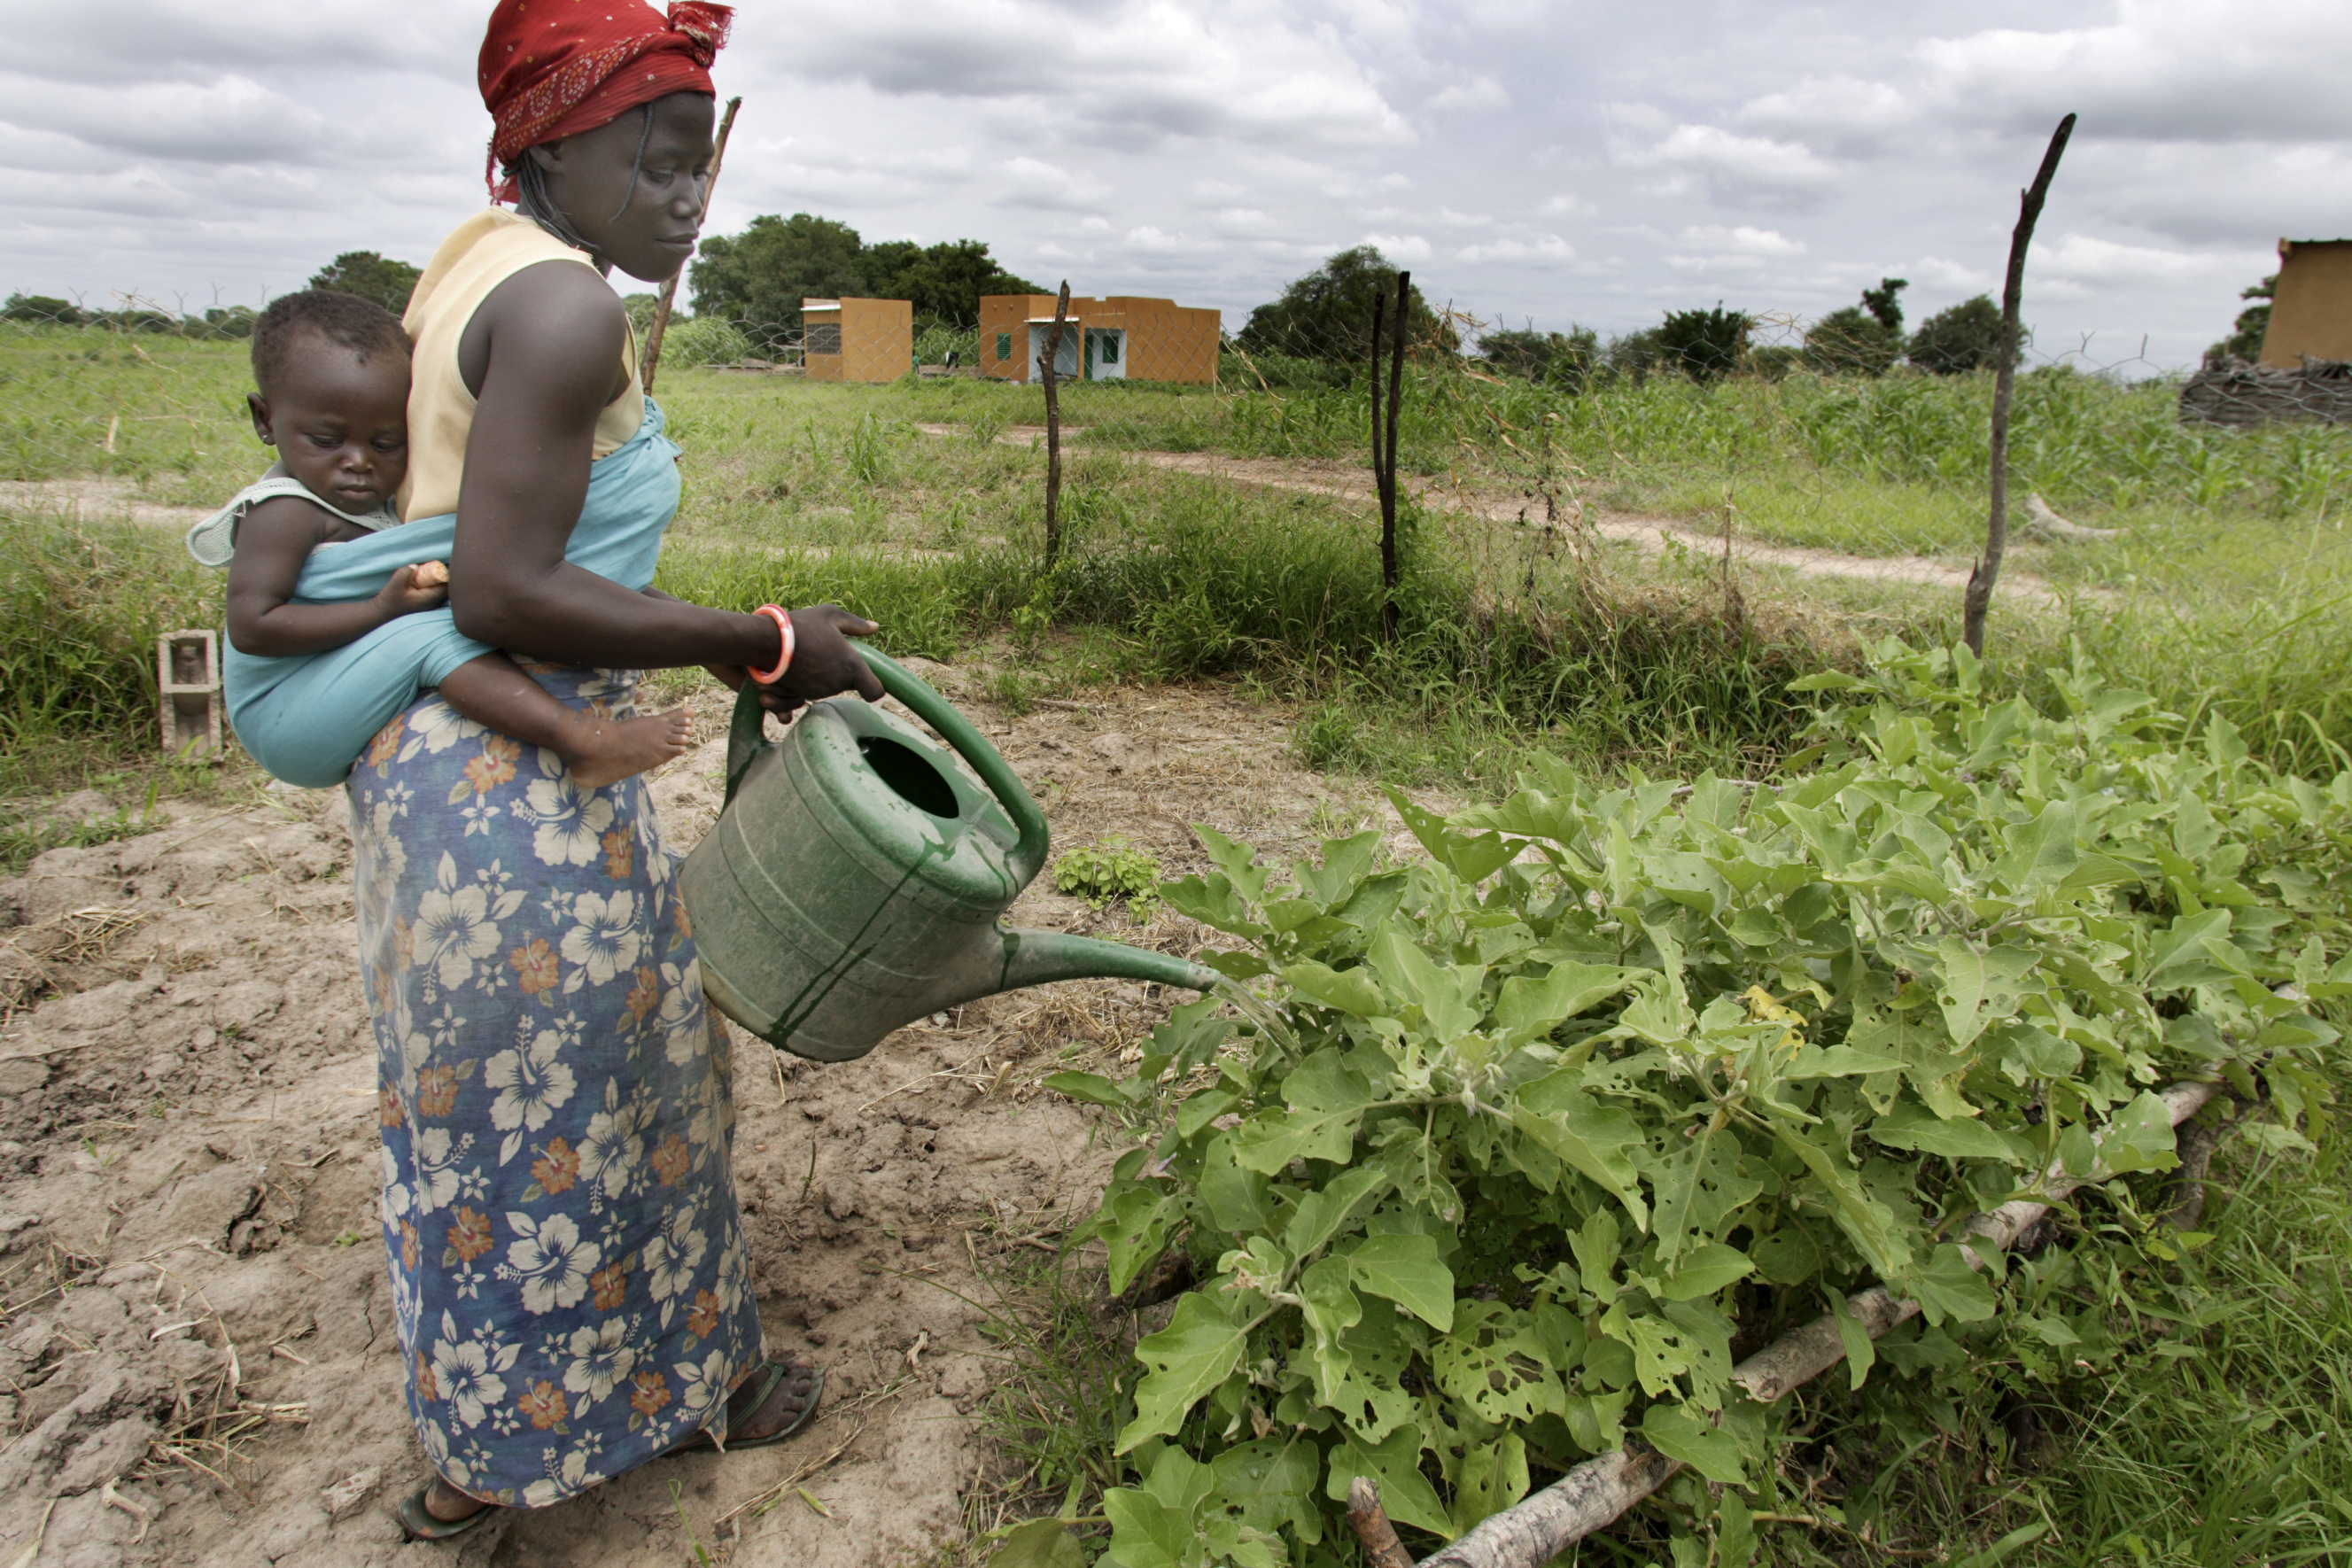 Gardening in Burkina Faso. Source: Flickr (George Blonsky/HKI)